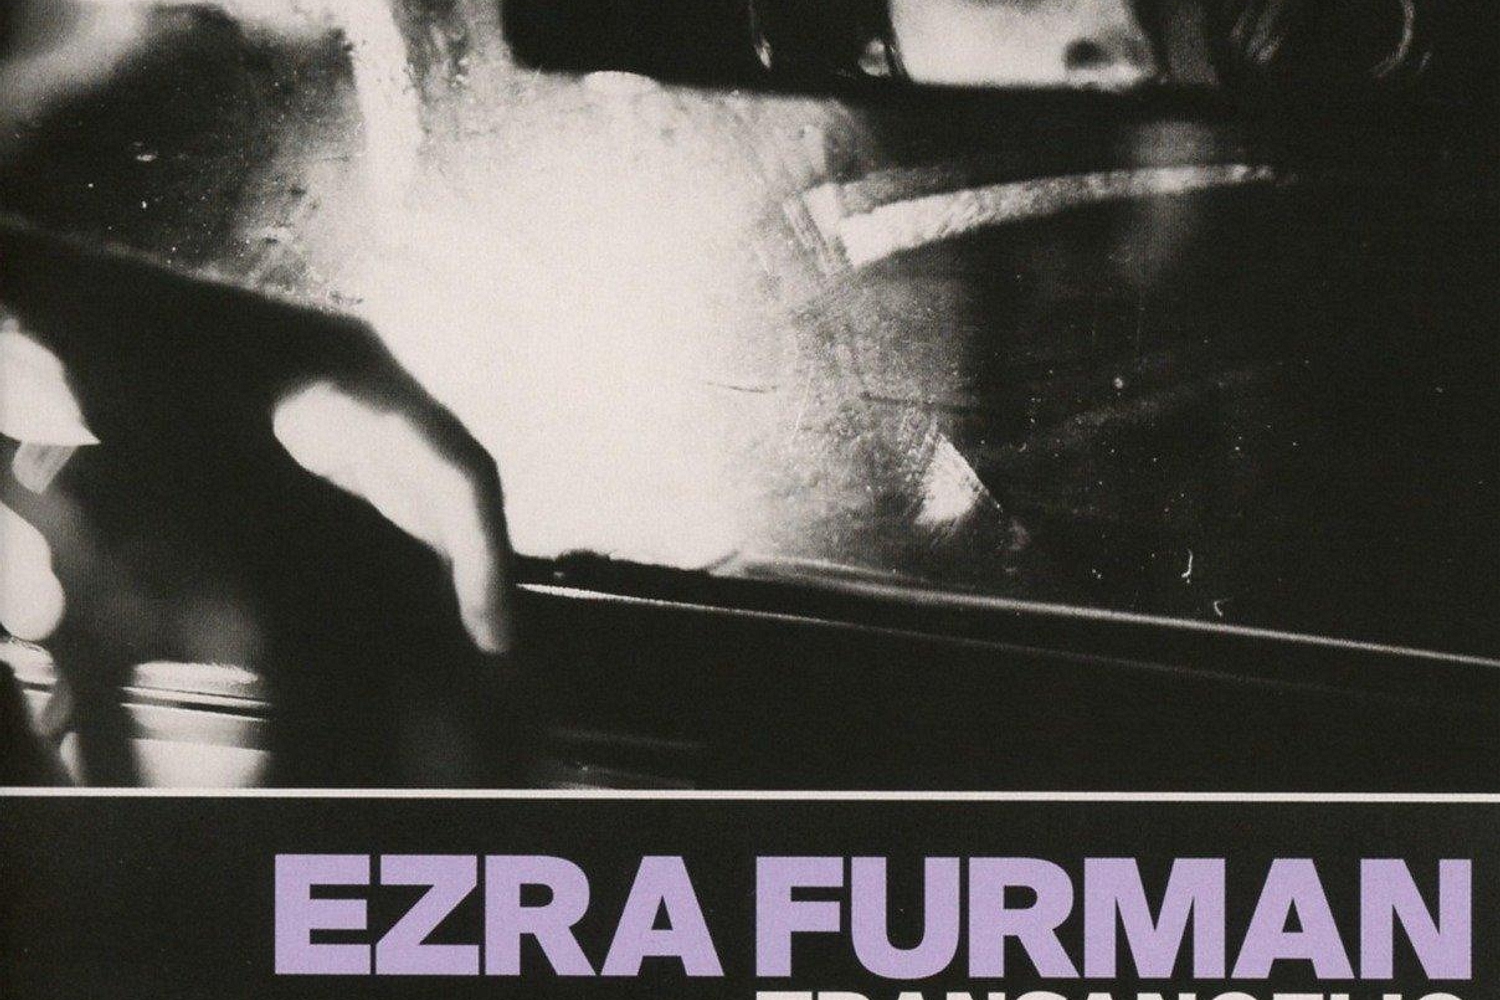 Ezra Furman - Transangelic Exodus